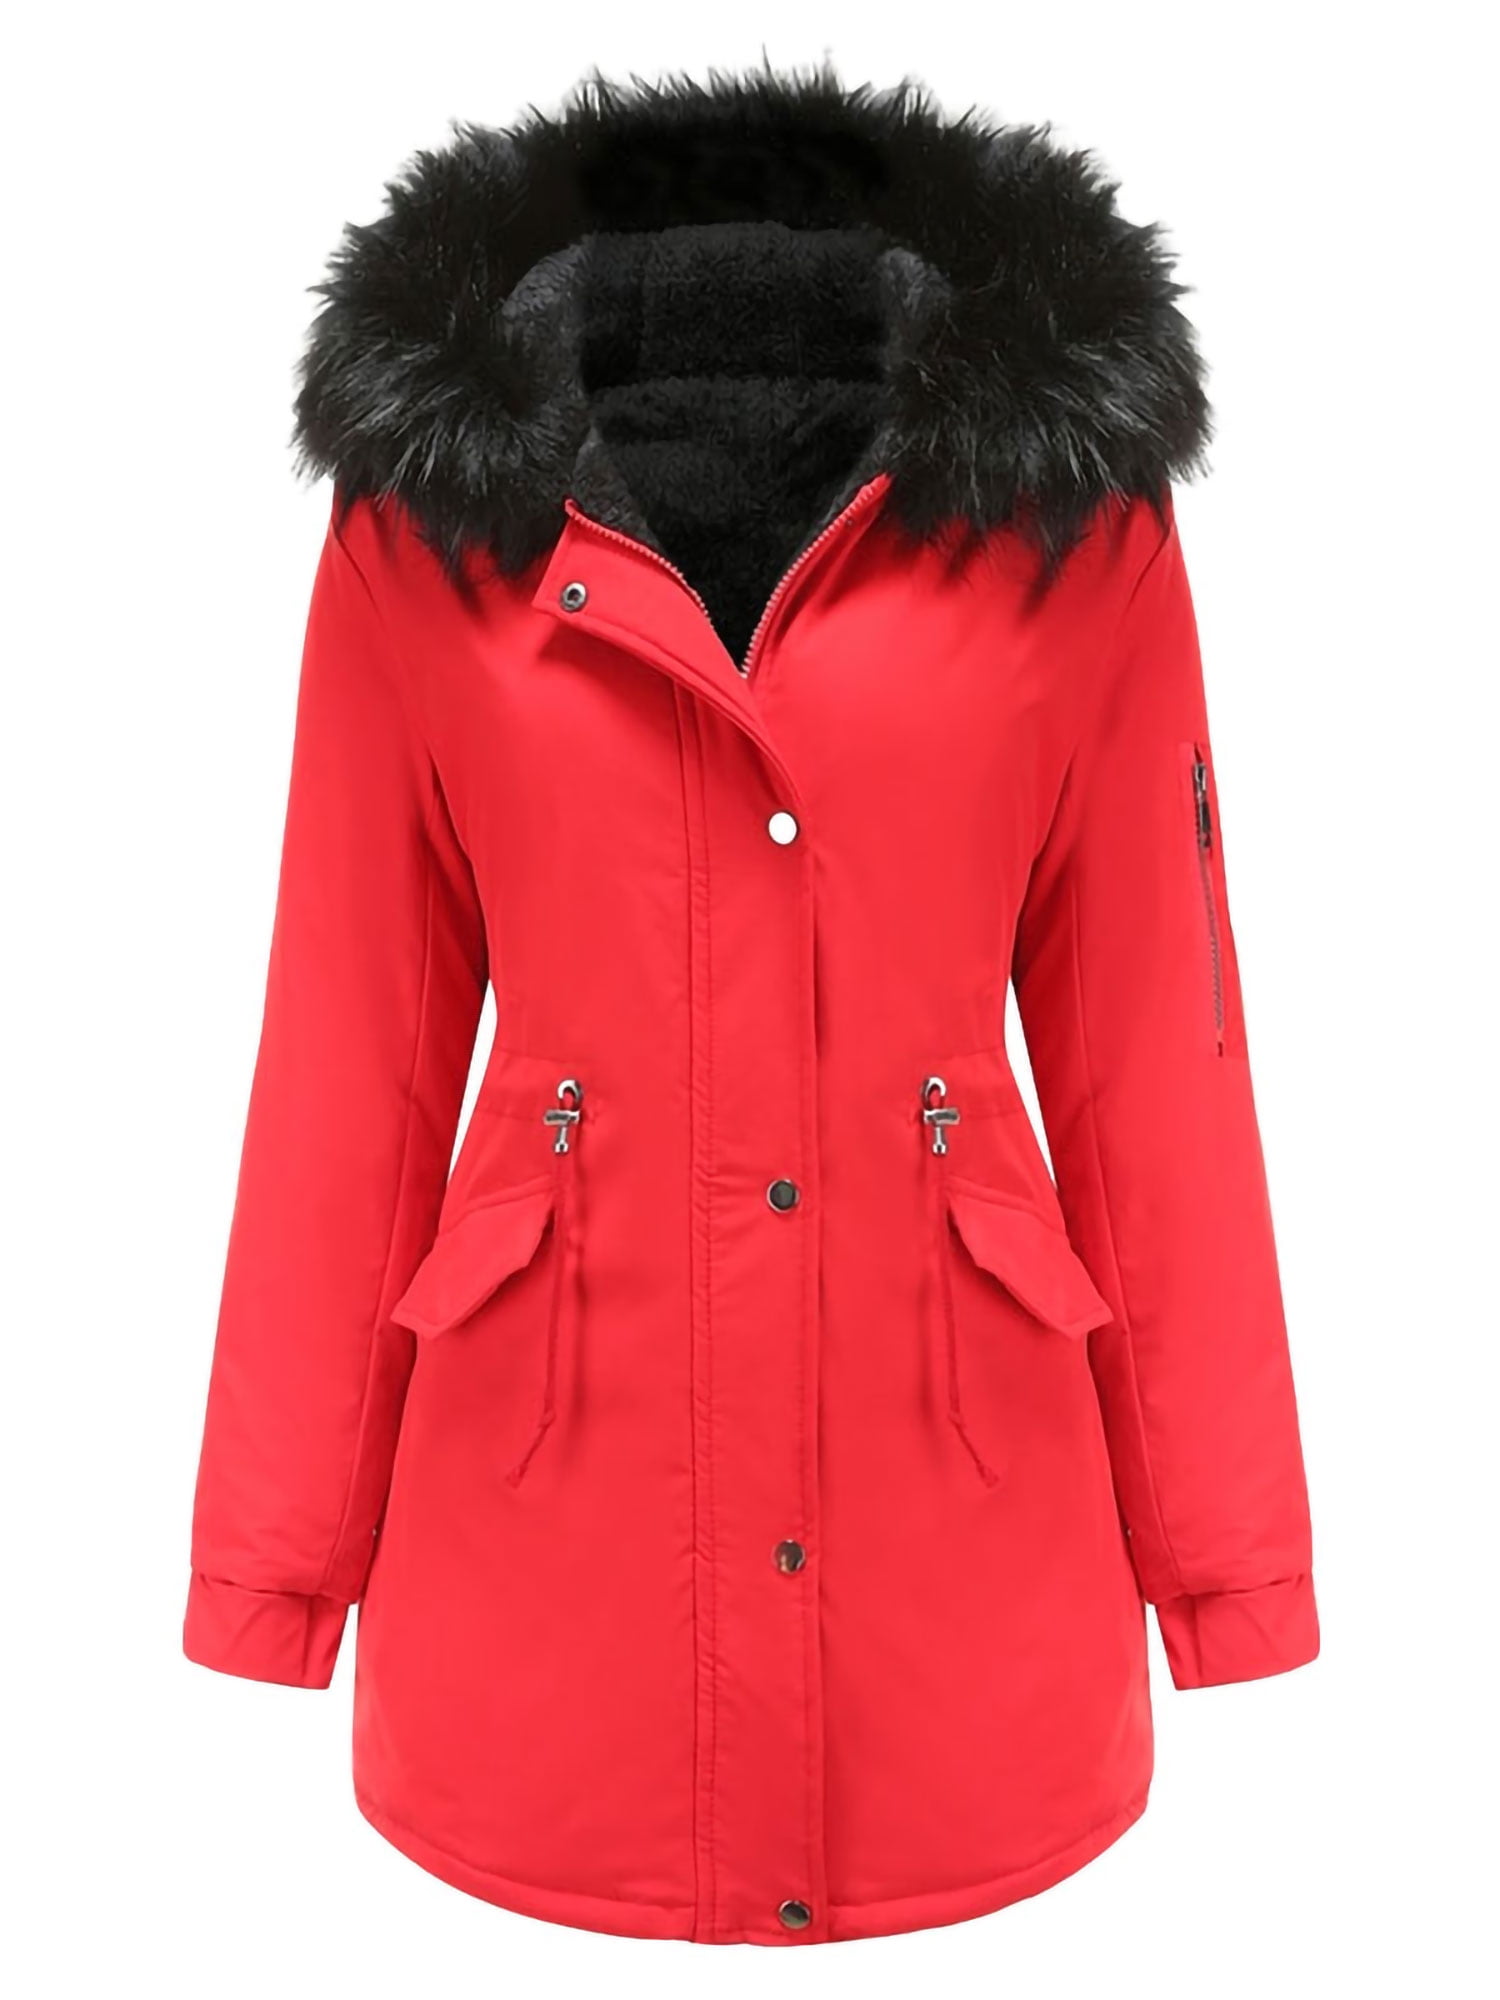 Hot Parka Hooded Long Puffer Women Jacket Coat Snow Padded Winter Warm Outerwear